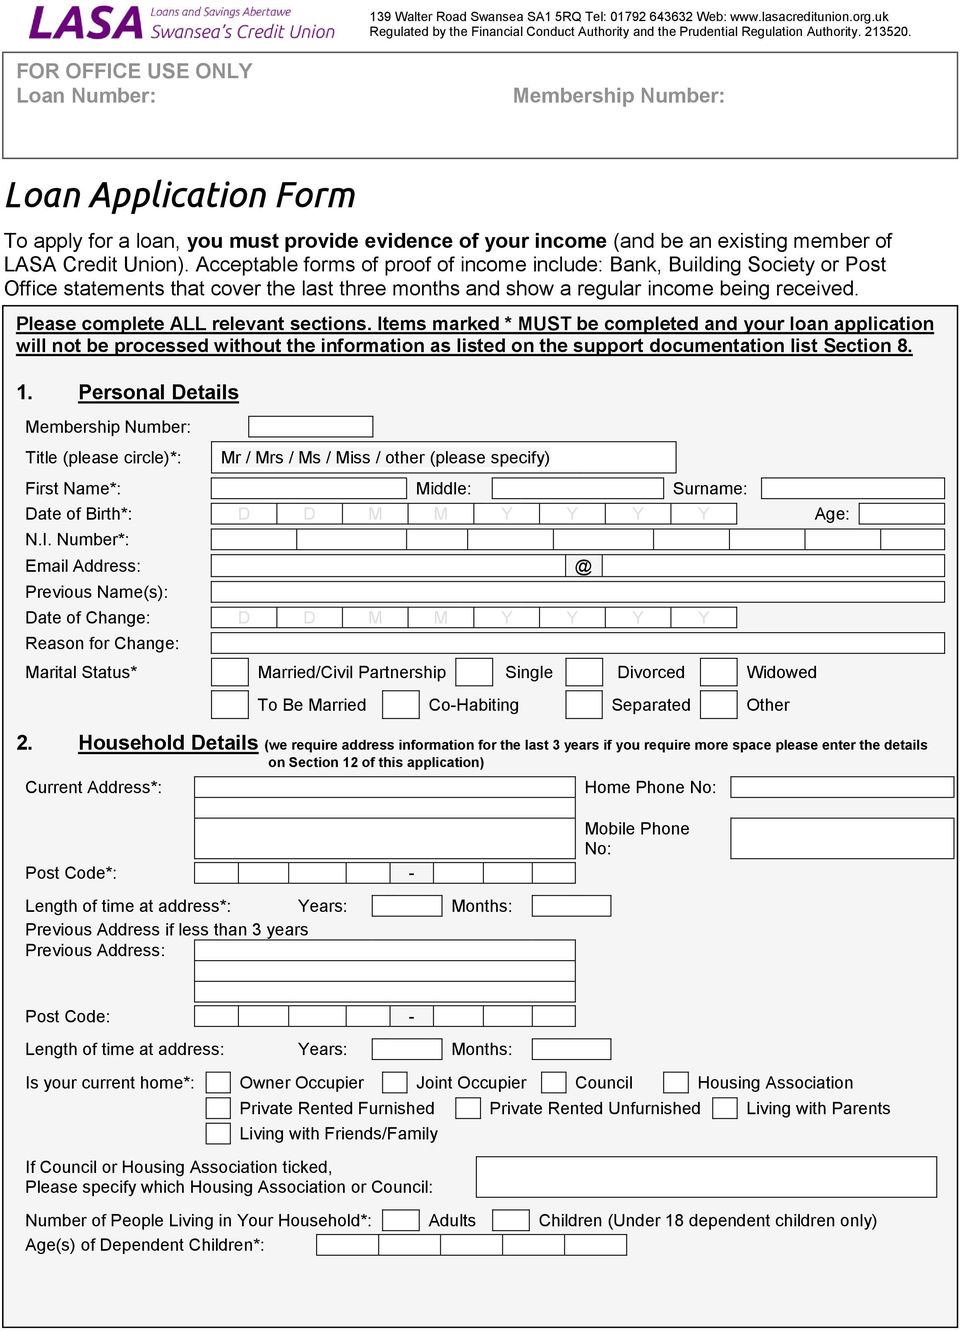 Loan Application Form Pdf Free Download